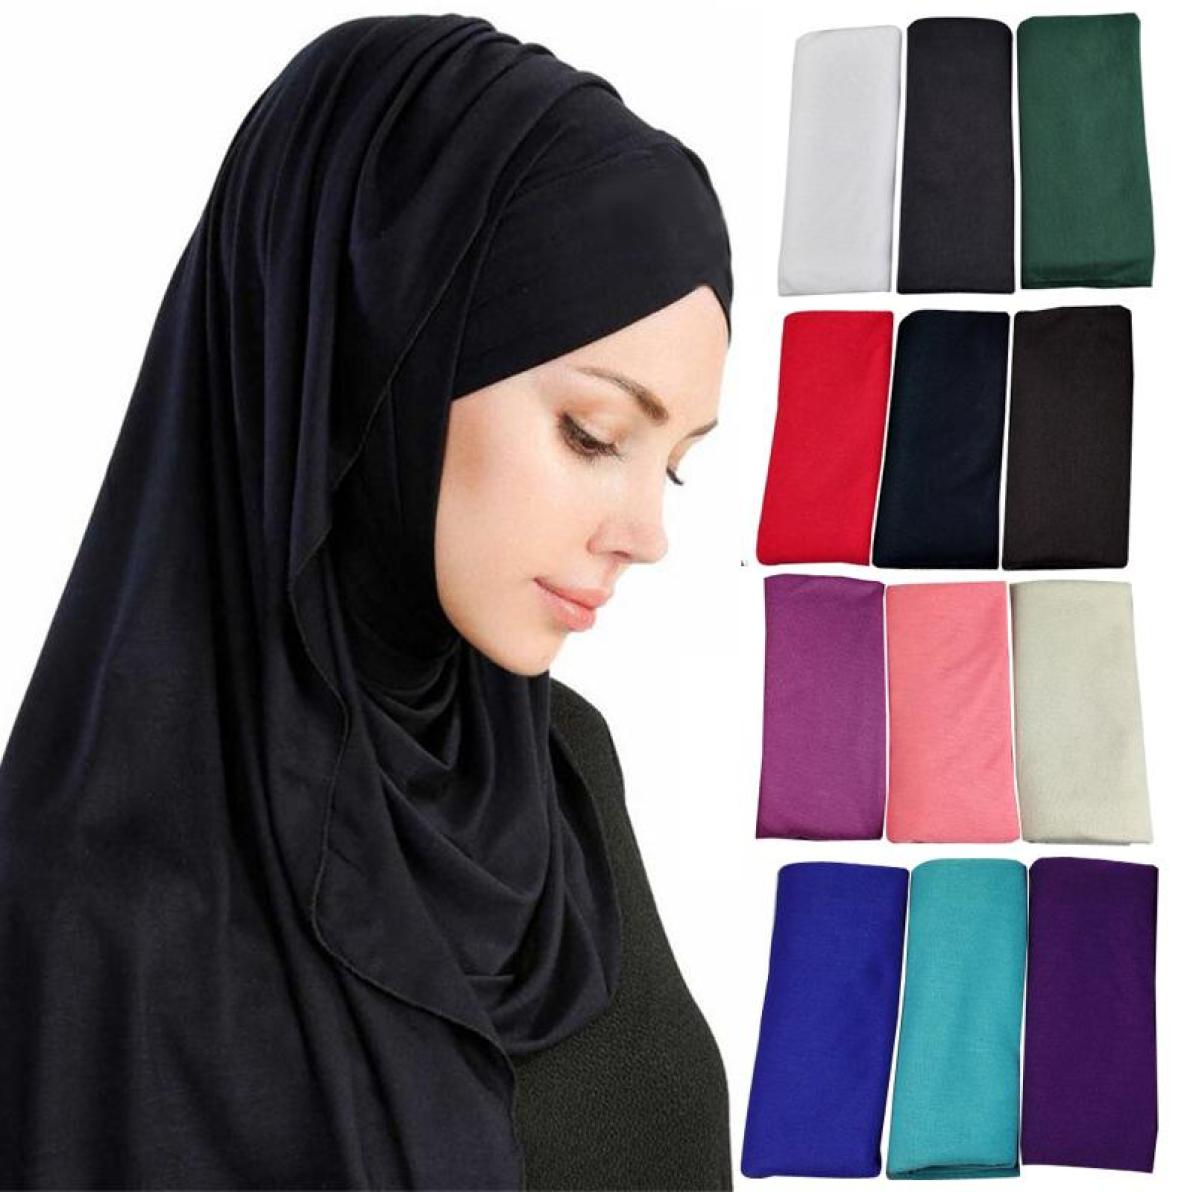 

Scarves Fashion Women Solid Color Cotton Headscarf Ready To Wear Instant Hijab Scarf Muslim Shawl Islamic Hijabs Arab Wrap Head8299040